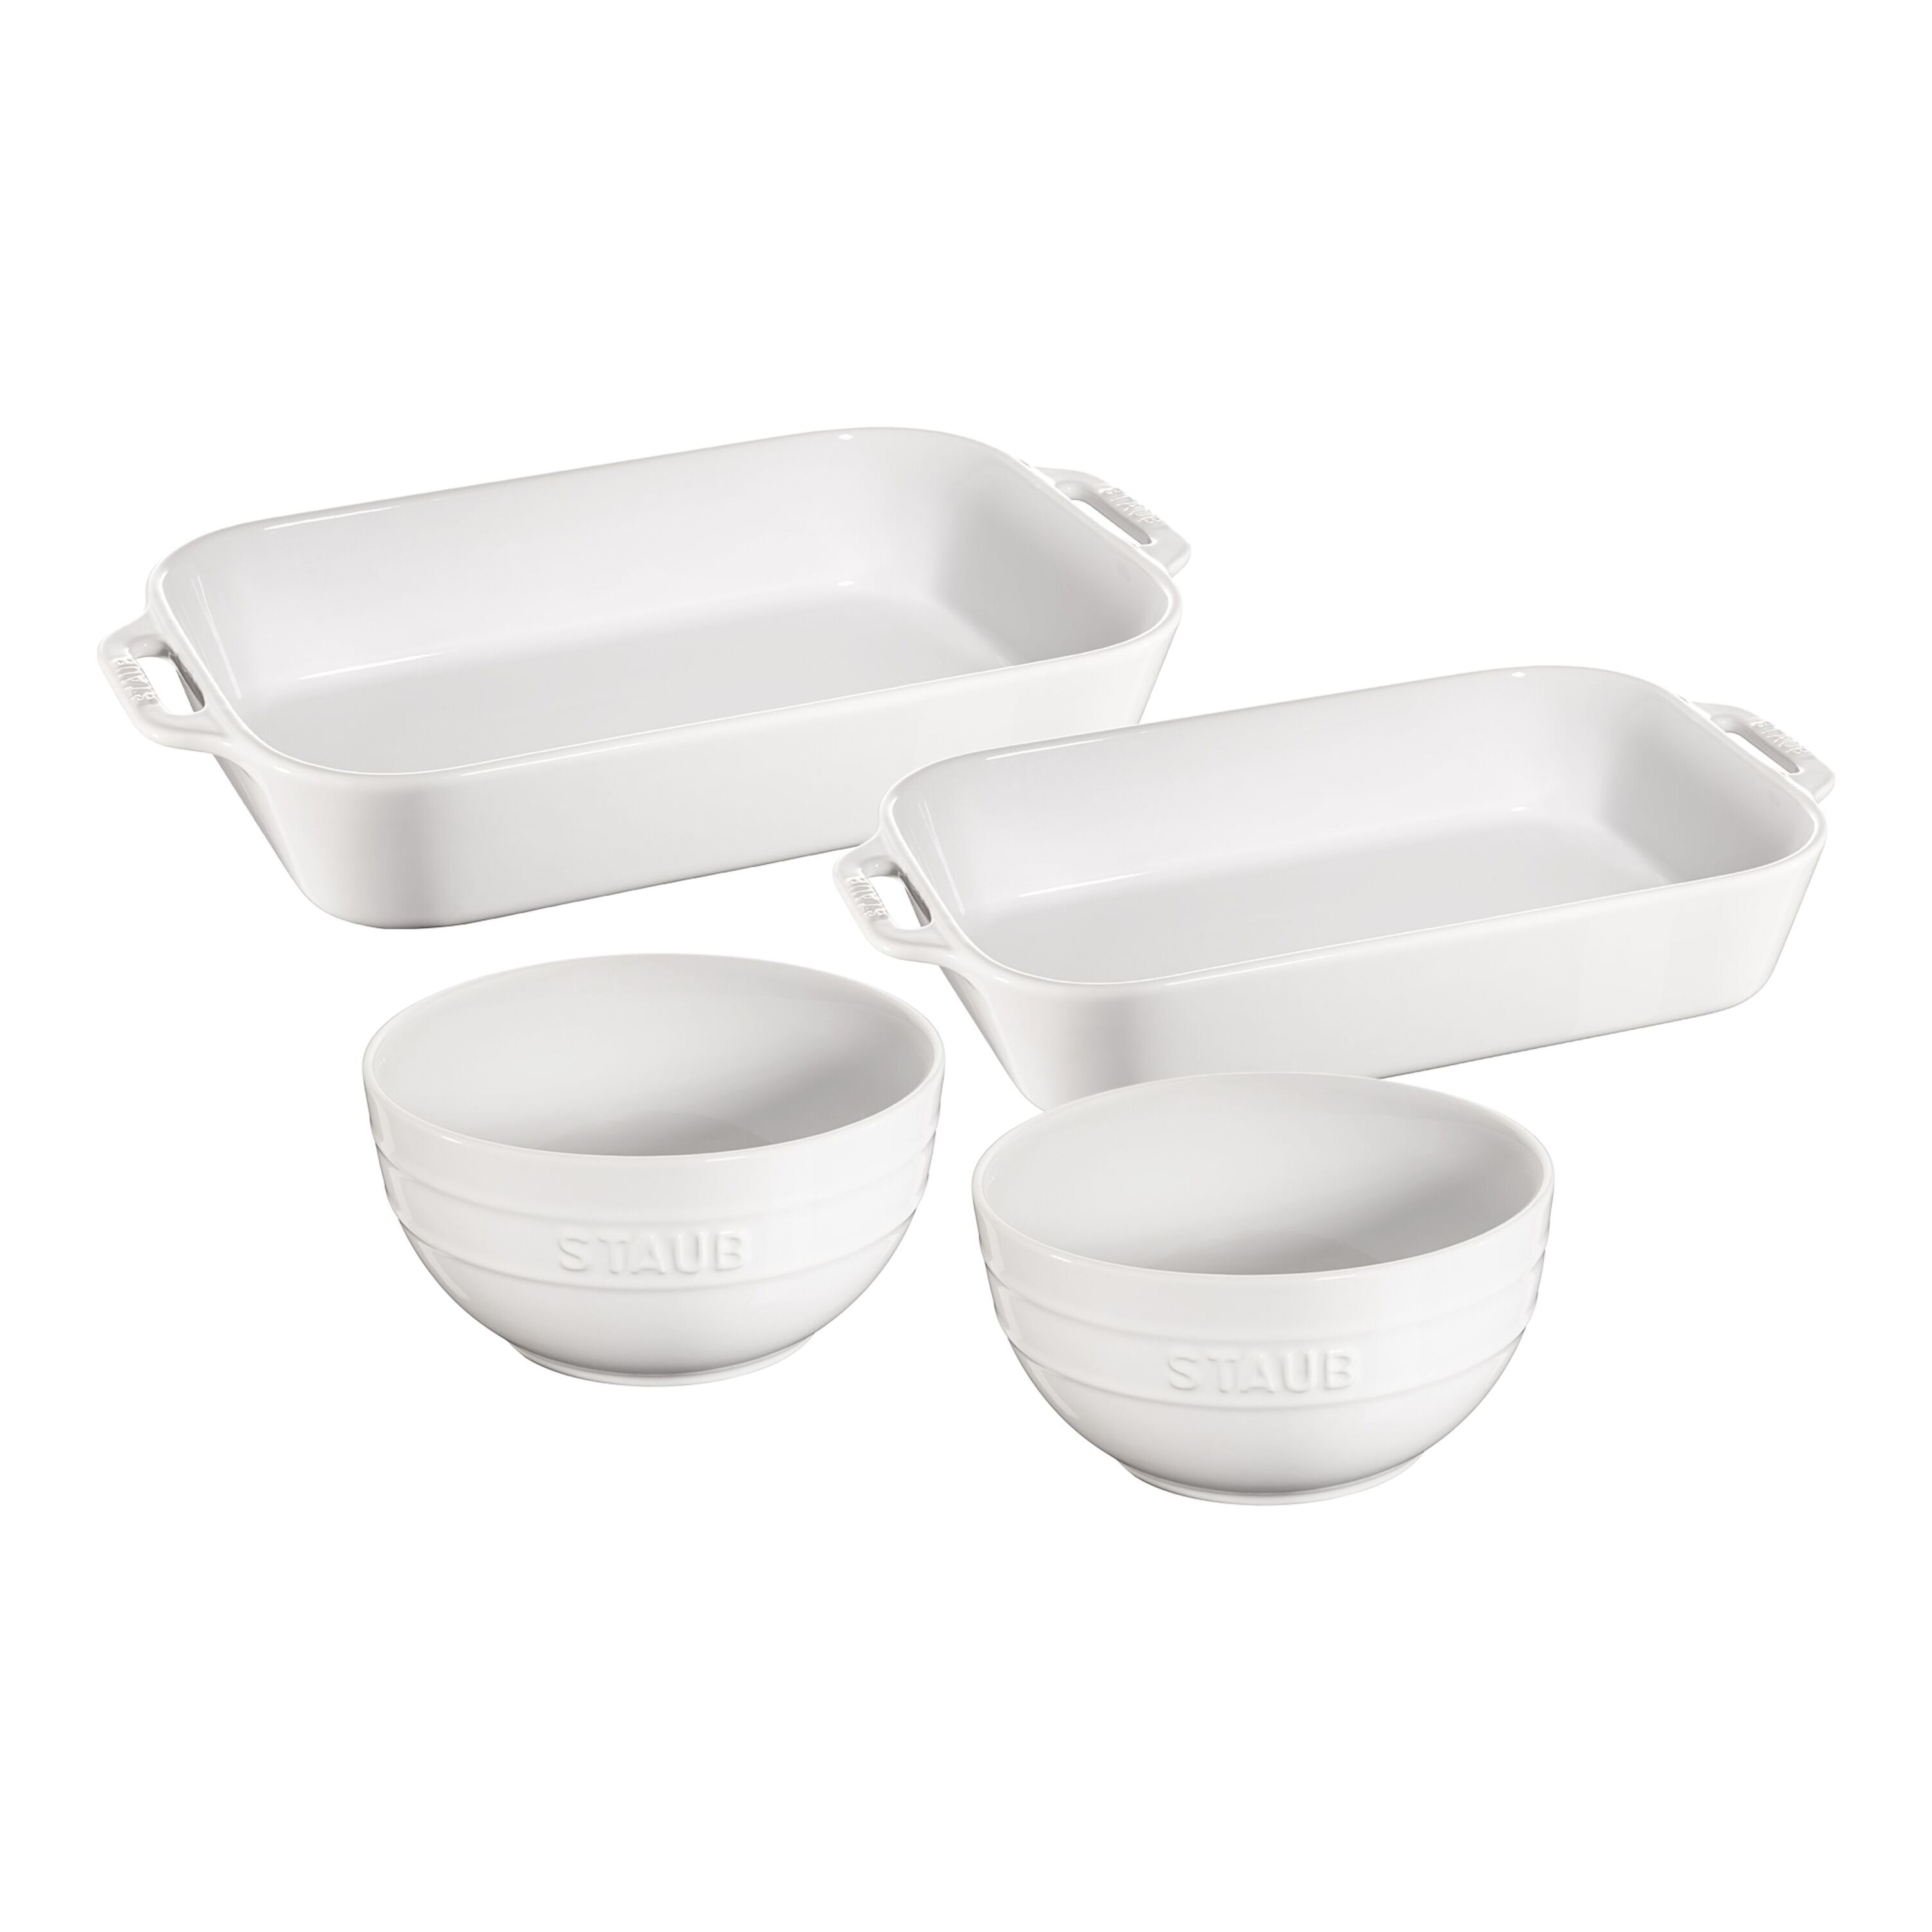  Staub Ceramics 4-pc Baking Pans Set, Casserole Dish